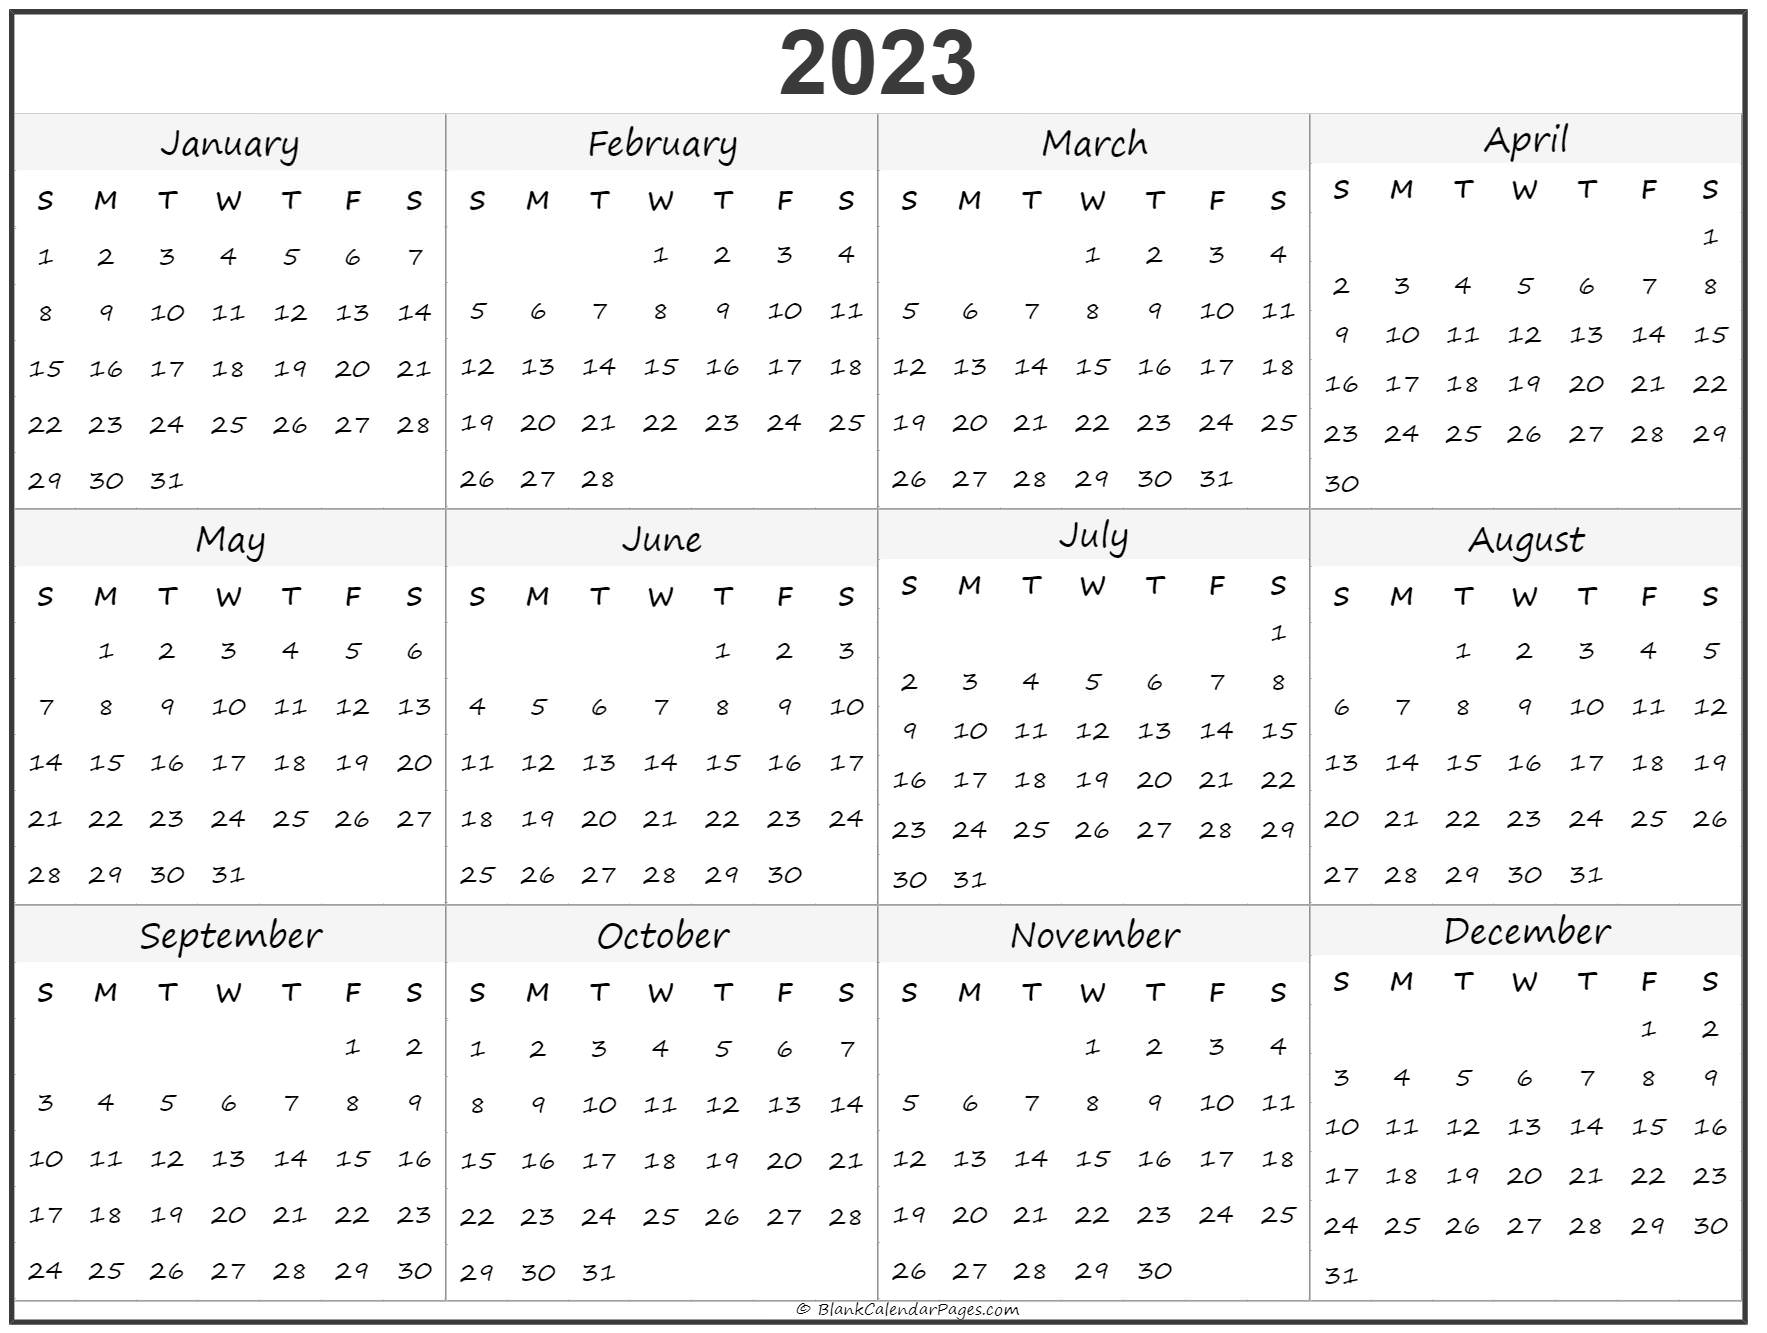 2023 Calendar Templates And Images 2023 Calendar Pdf Word Excel 2023 Printable Calendar For